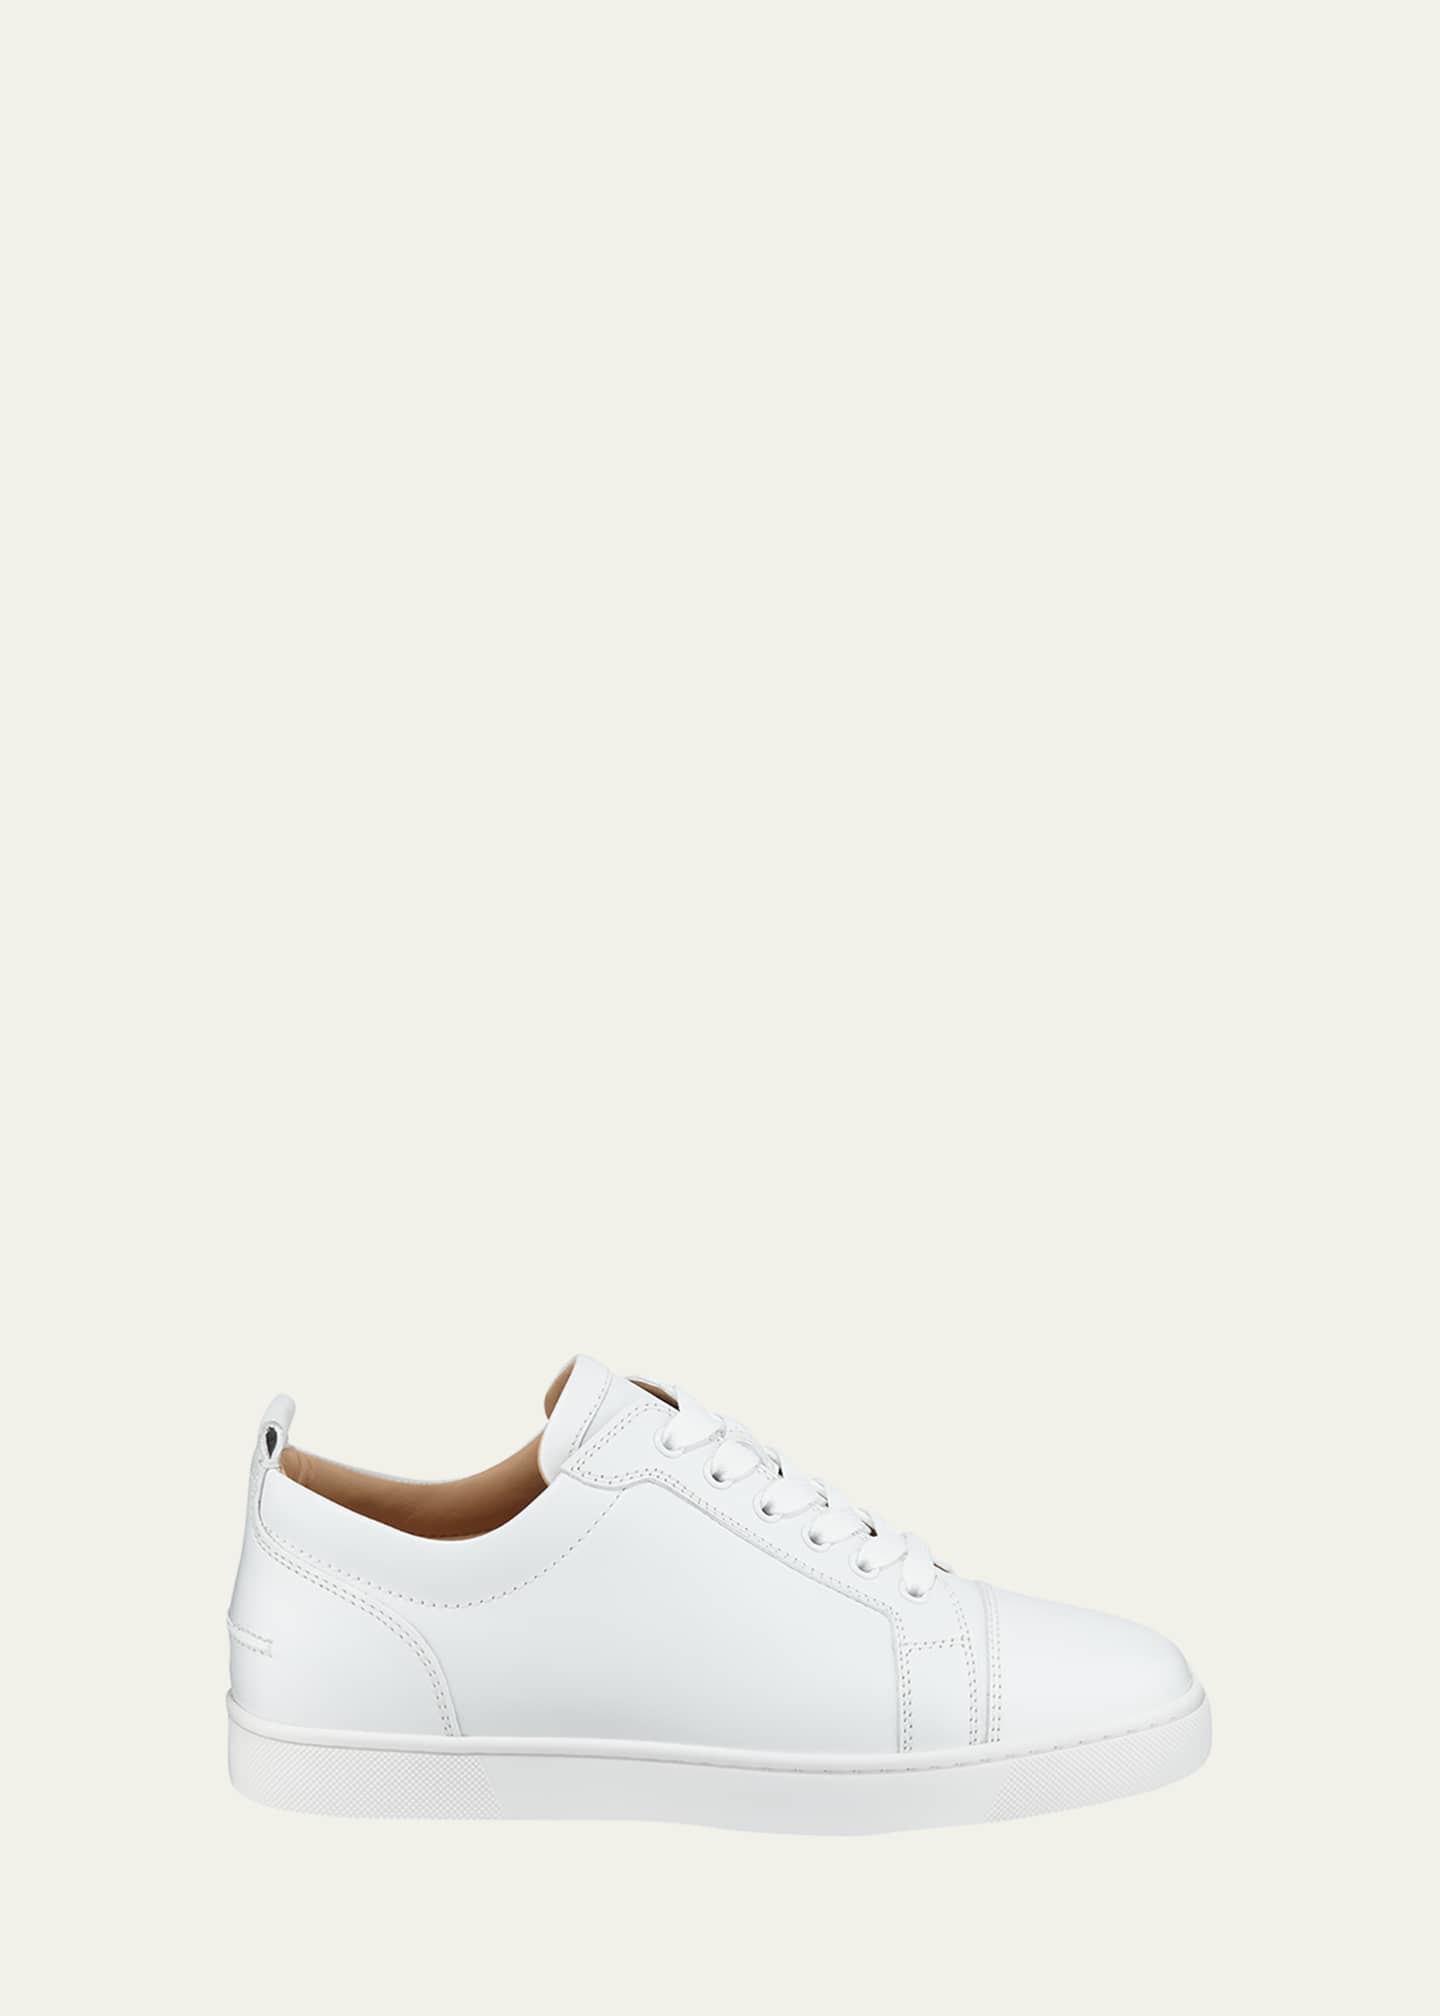 Christian Louboutin Louis Junior Flat Calf White Sneakers New Size 41.5 US  8.5